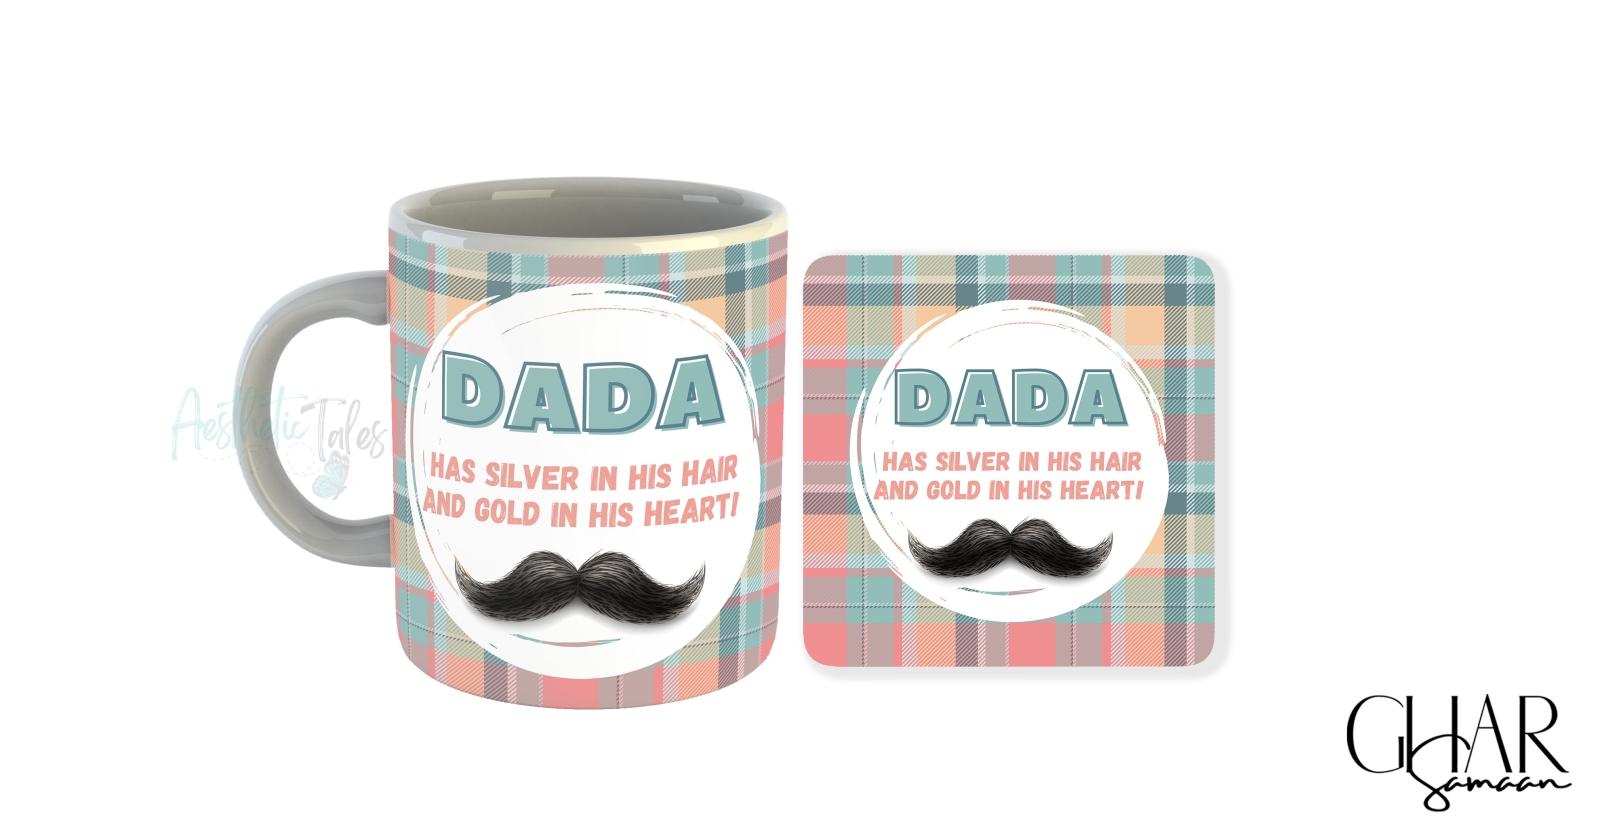 Dada (Mug + Coaster Set)